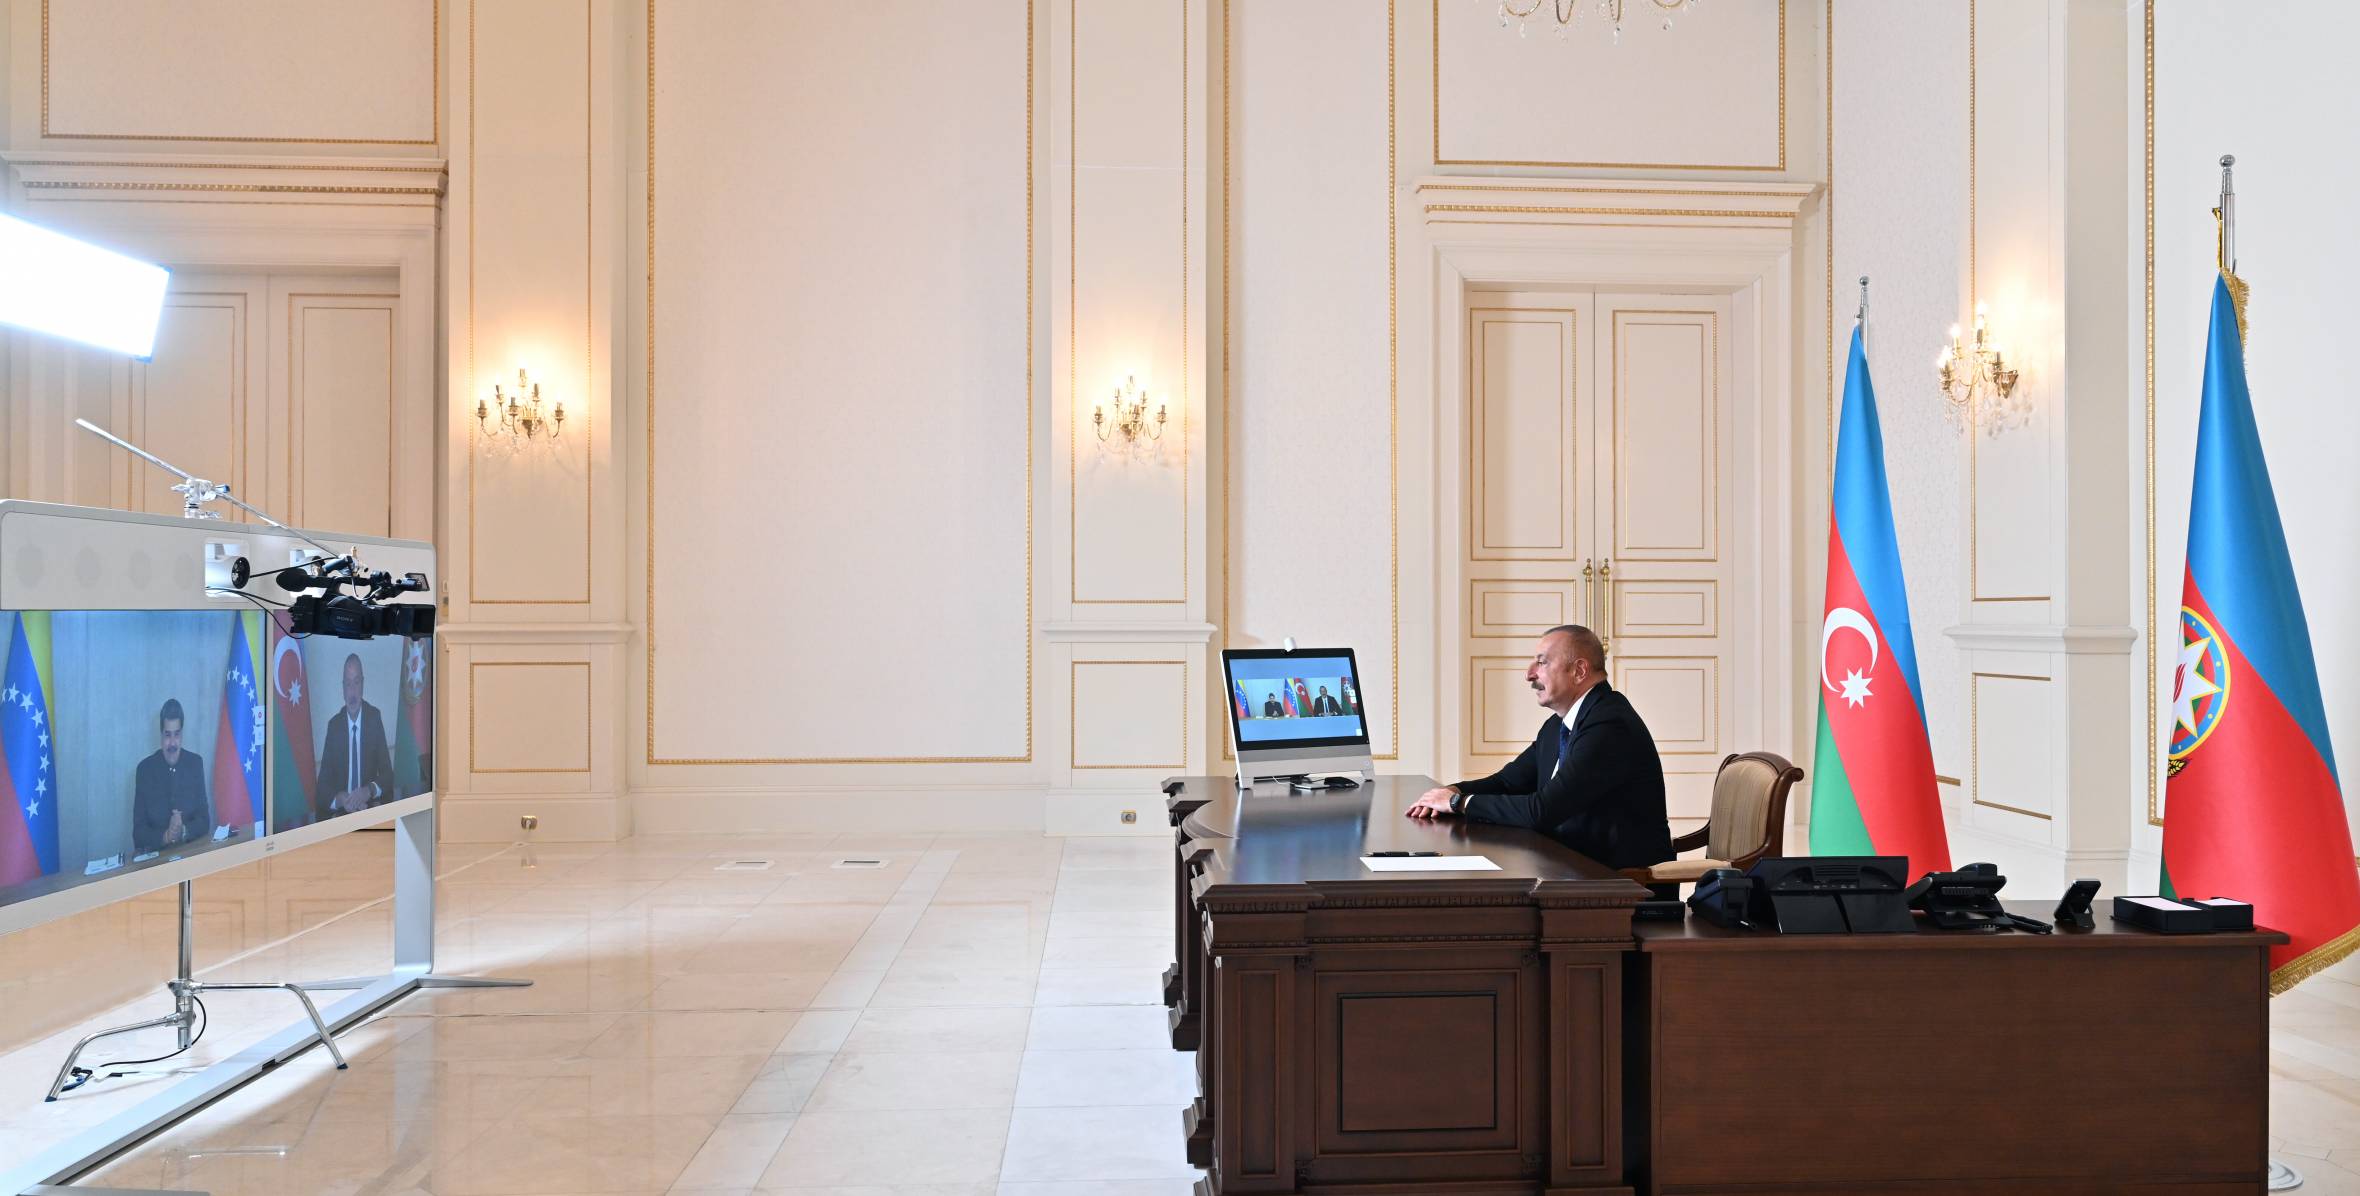 Ilham Aliyev met with President of Venezuela Nicolas Maduro in format of video conference